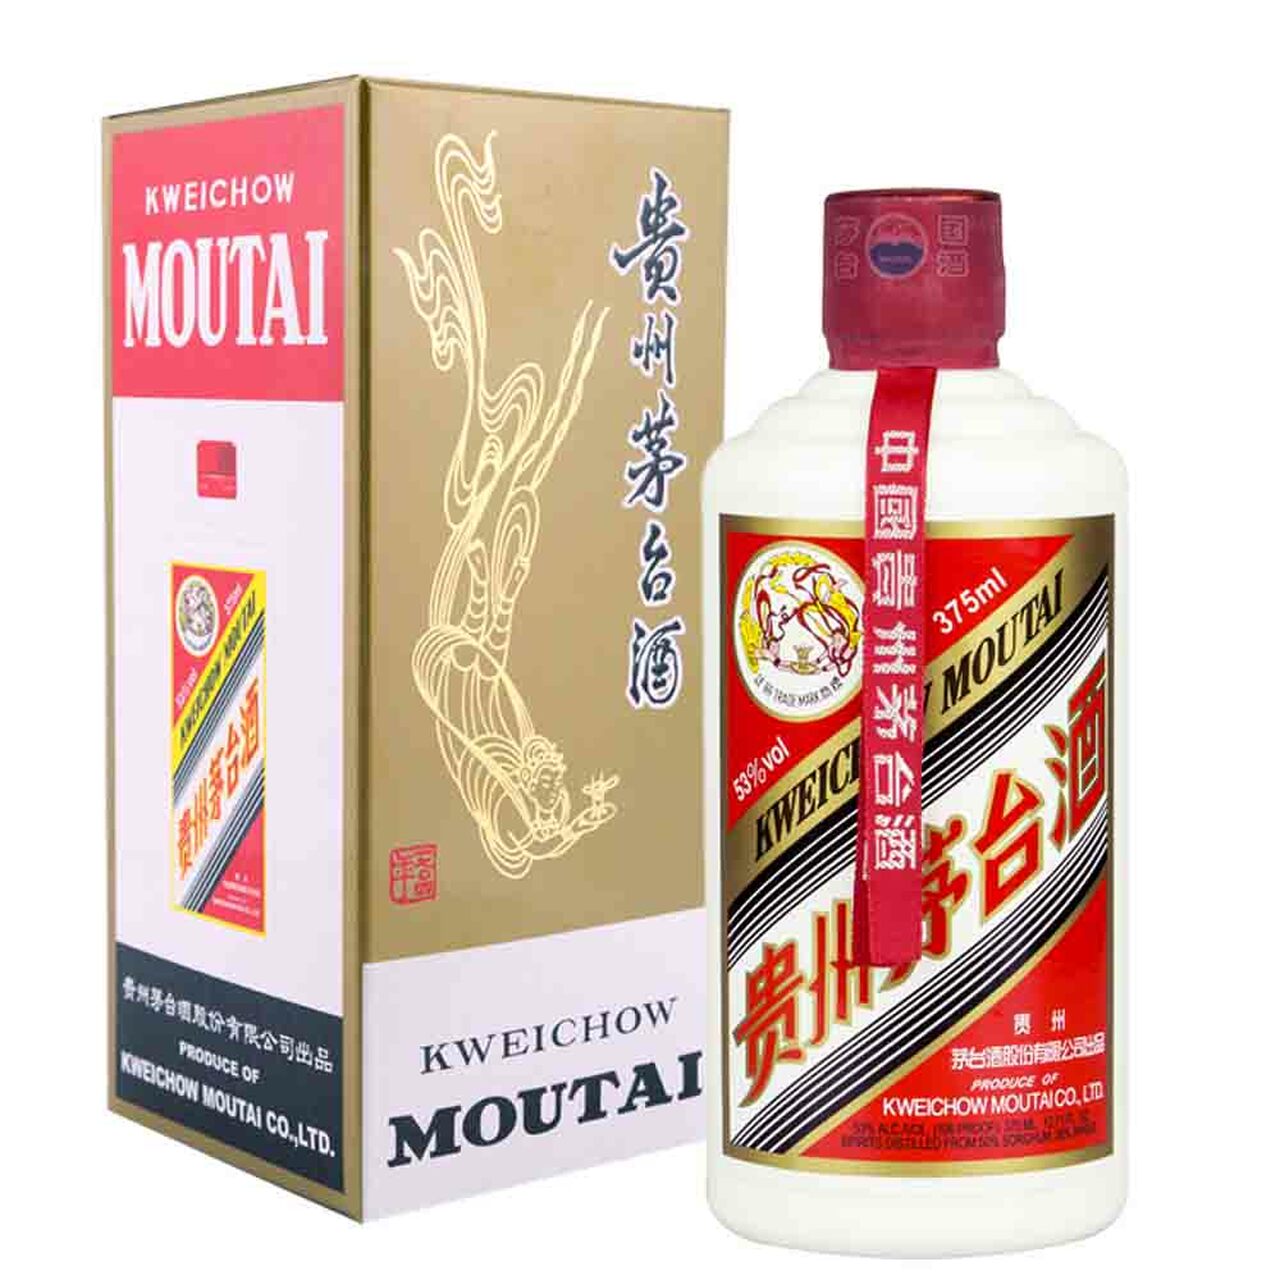 KUWEICHOW MOUTAI 貴州茅台酒 53%vol 500ml | shop.spackdubai.com